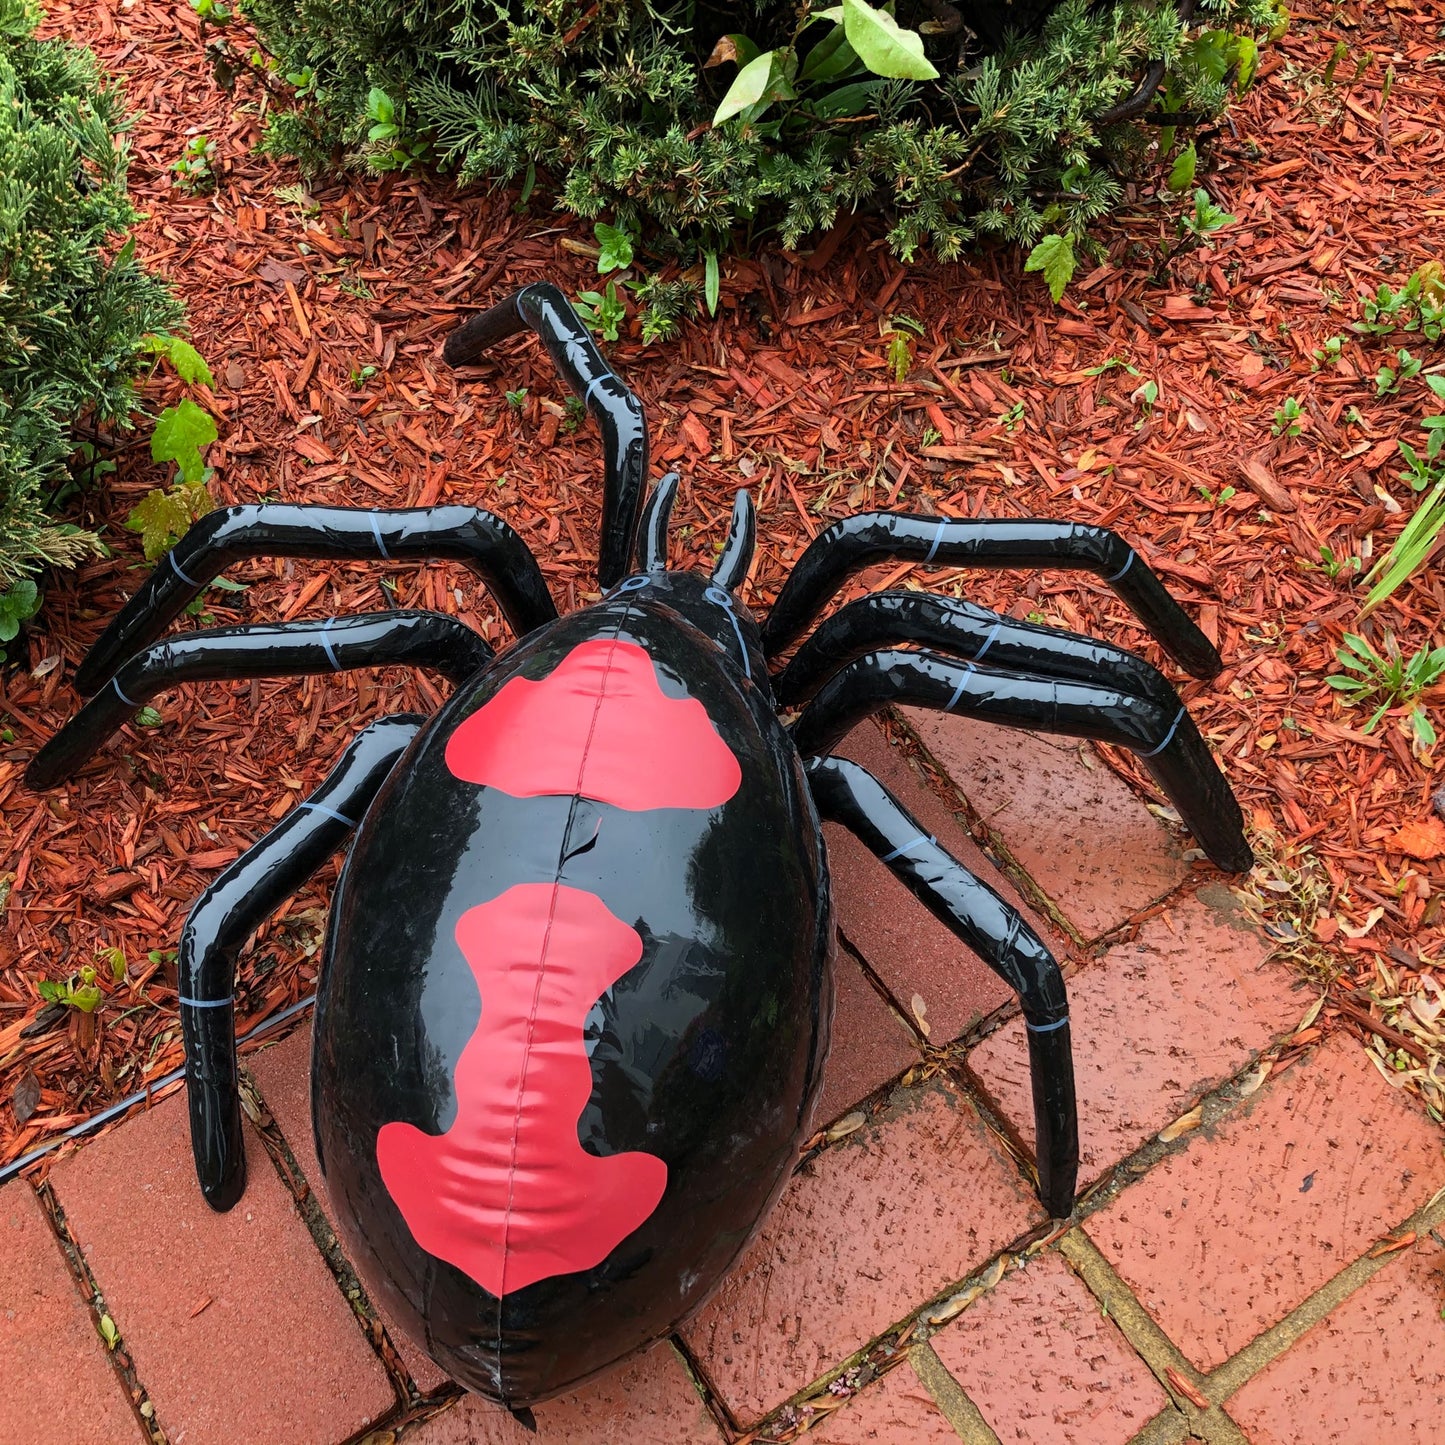 Jet Creations Spider Inflatable Black widow, 30 inch [JET-SPIDER]